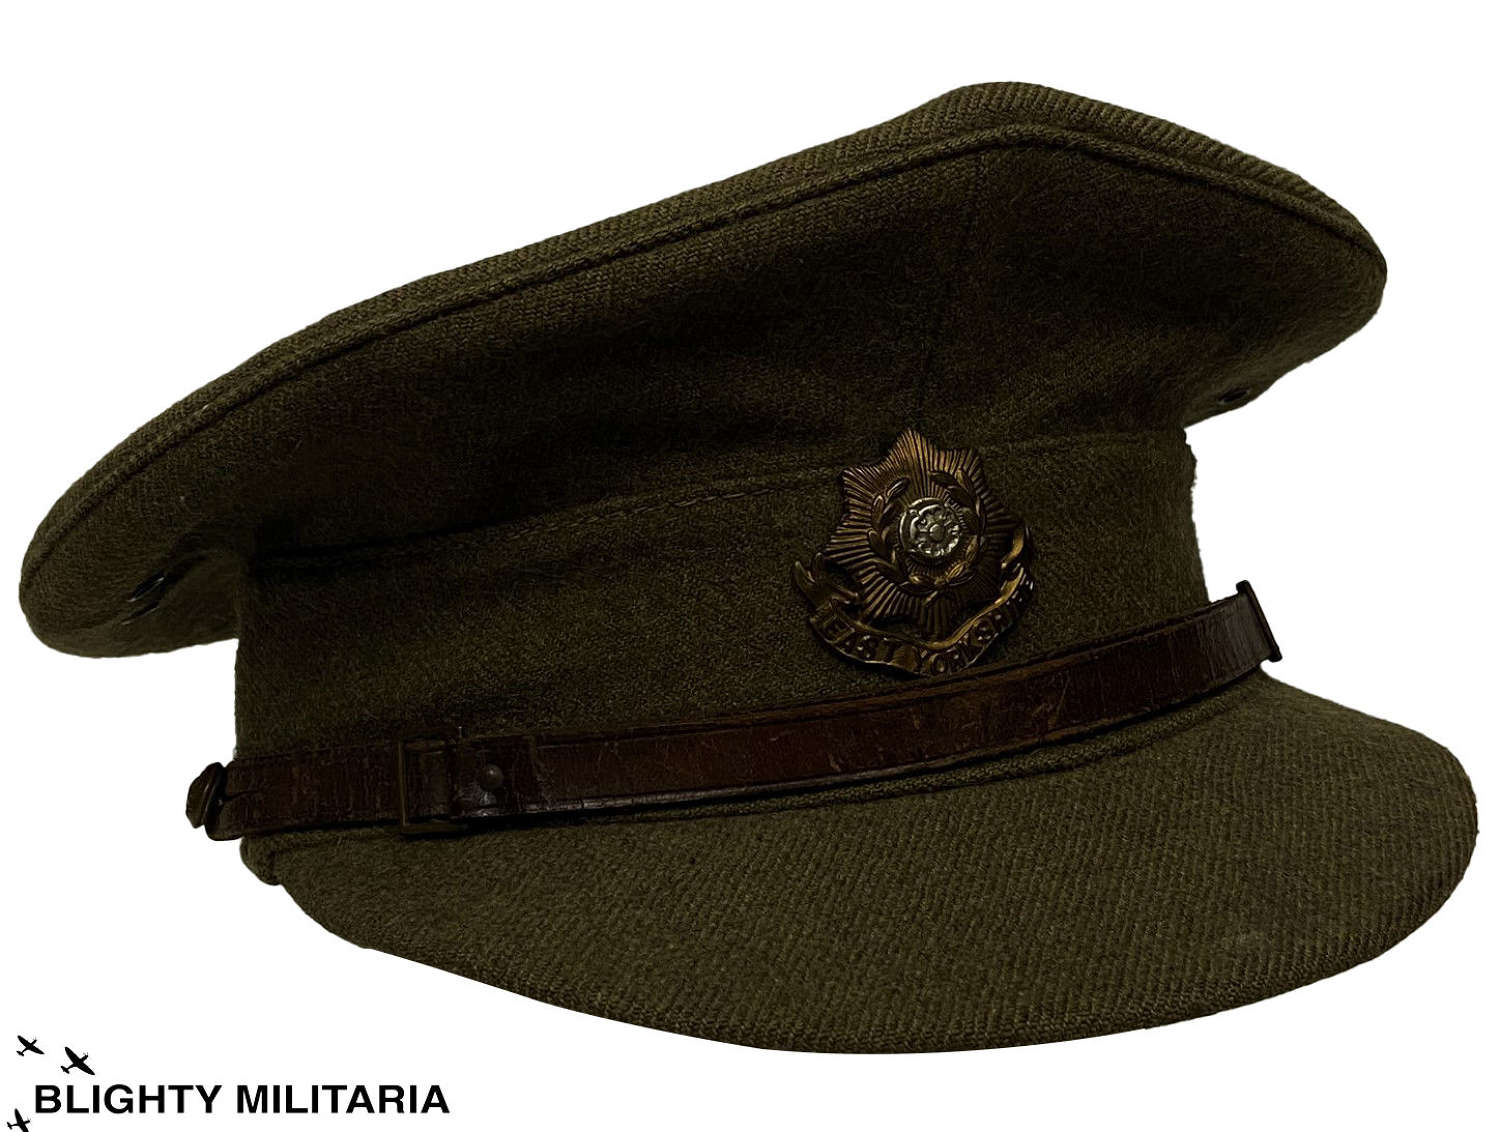 Original 1940s British Army 1922 Pattern Ordinary Ranks Peaked Cap